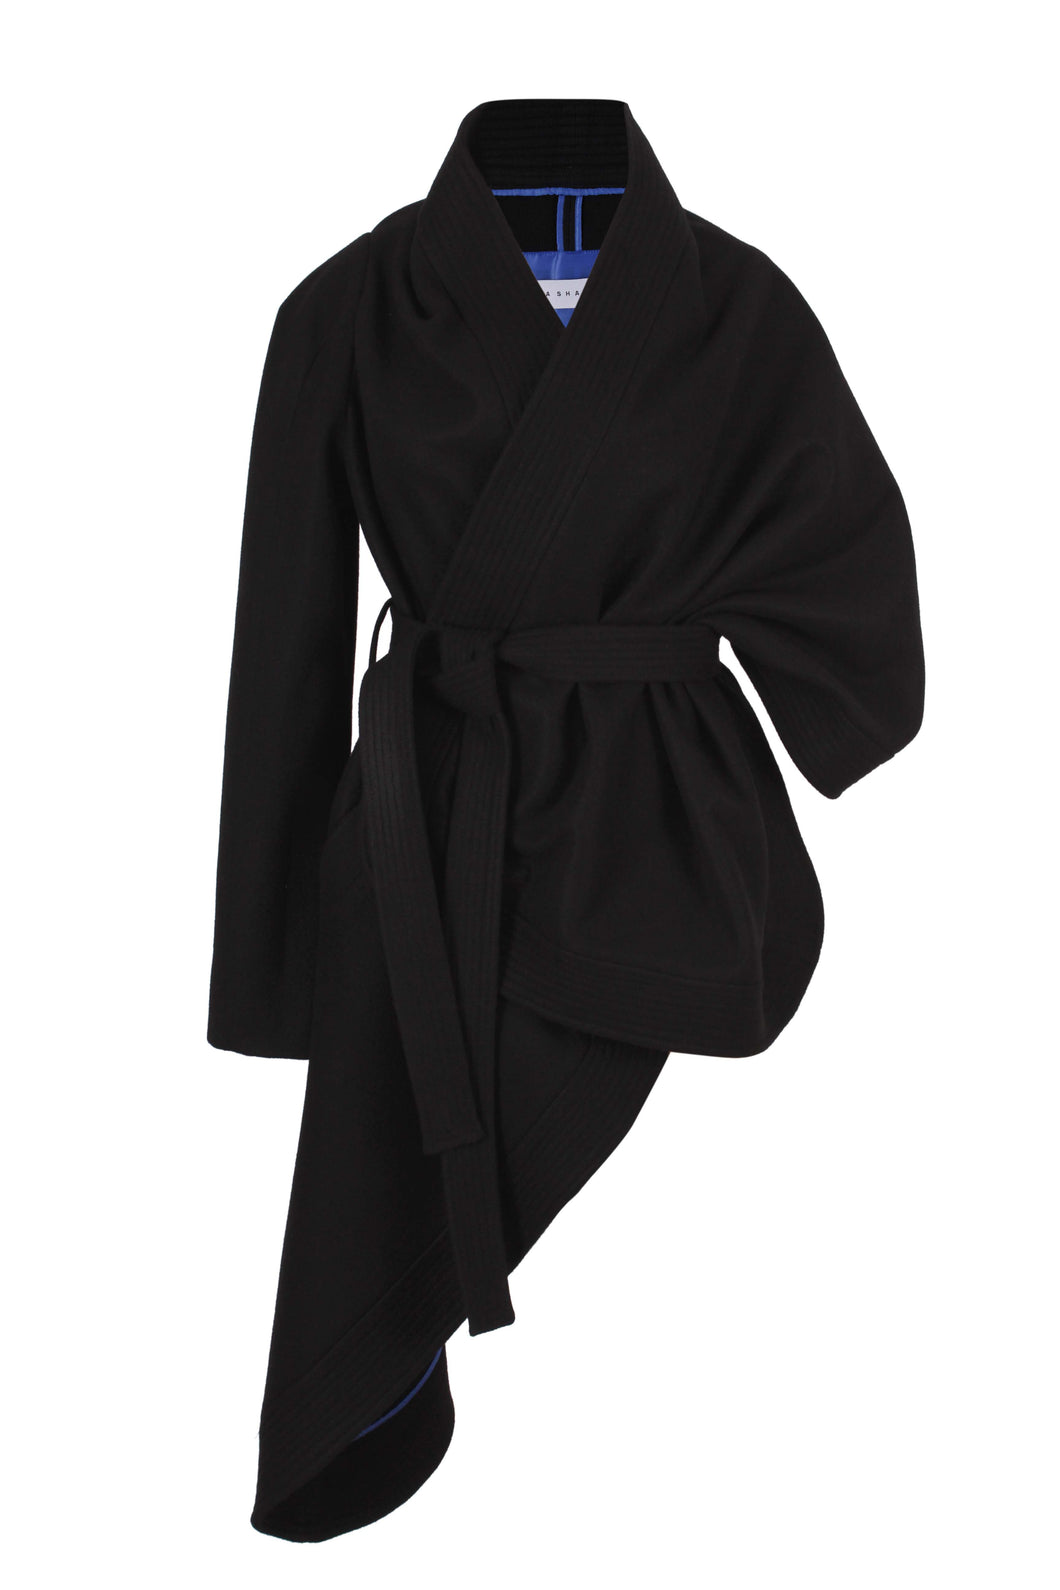 Black asymmetric one sleeve wool cape